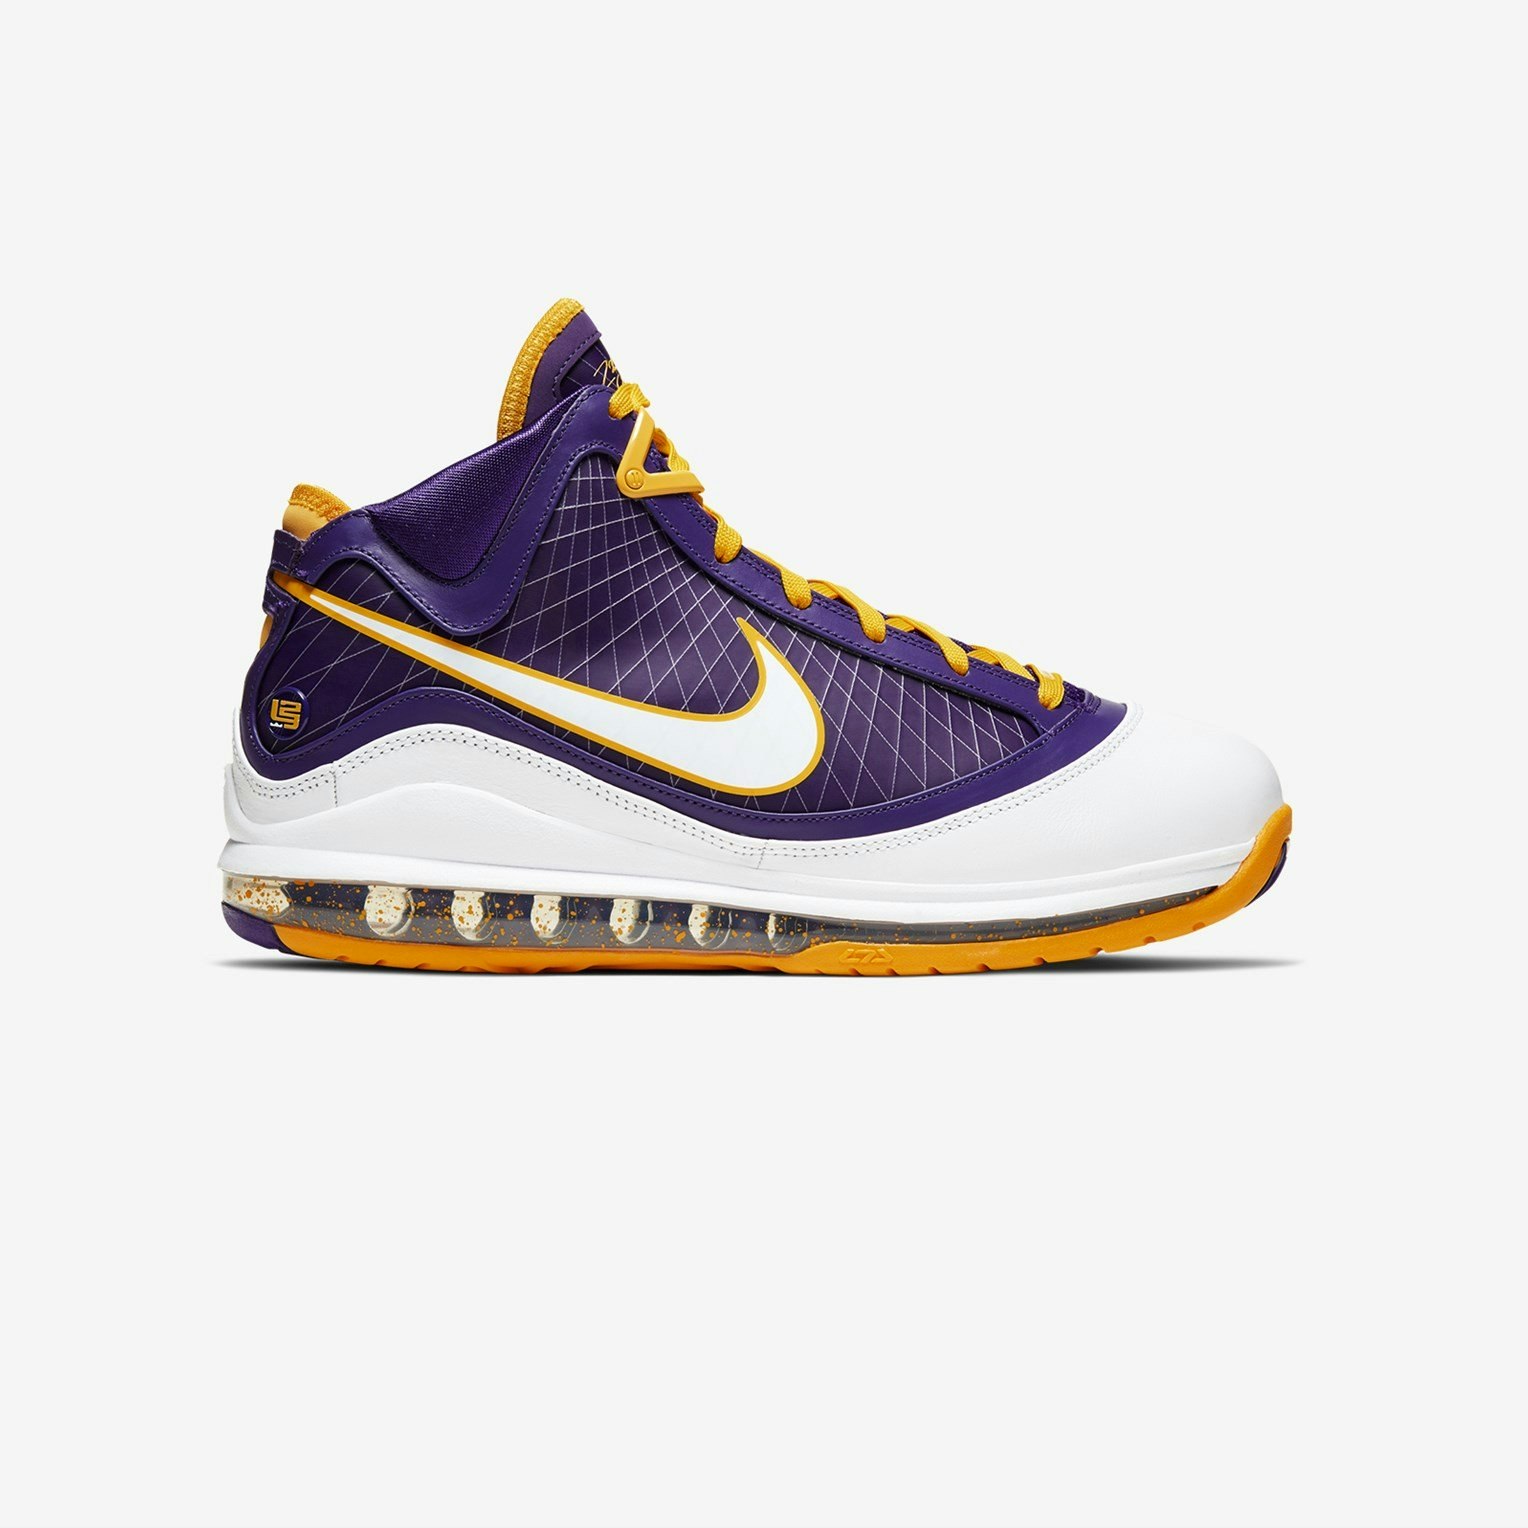 Nike Lebron 7 QS "Court Purple"